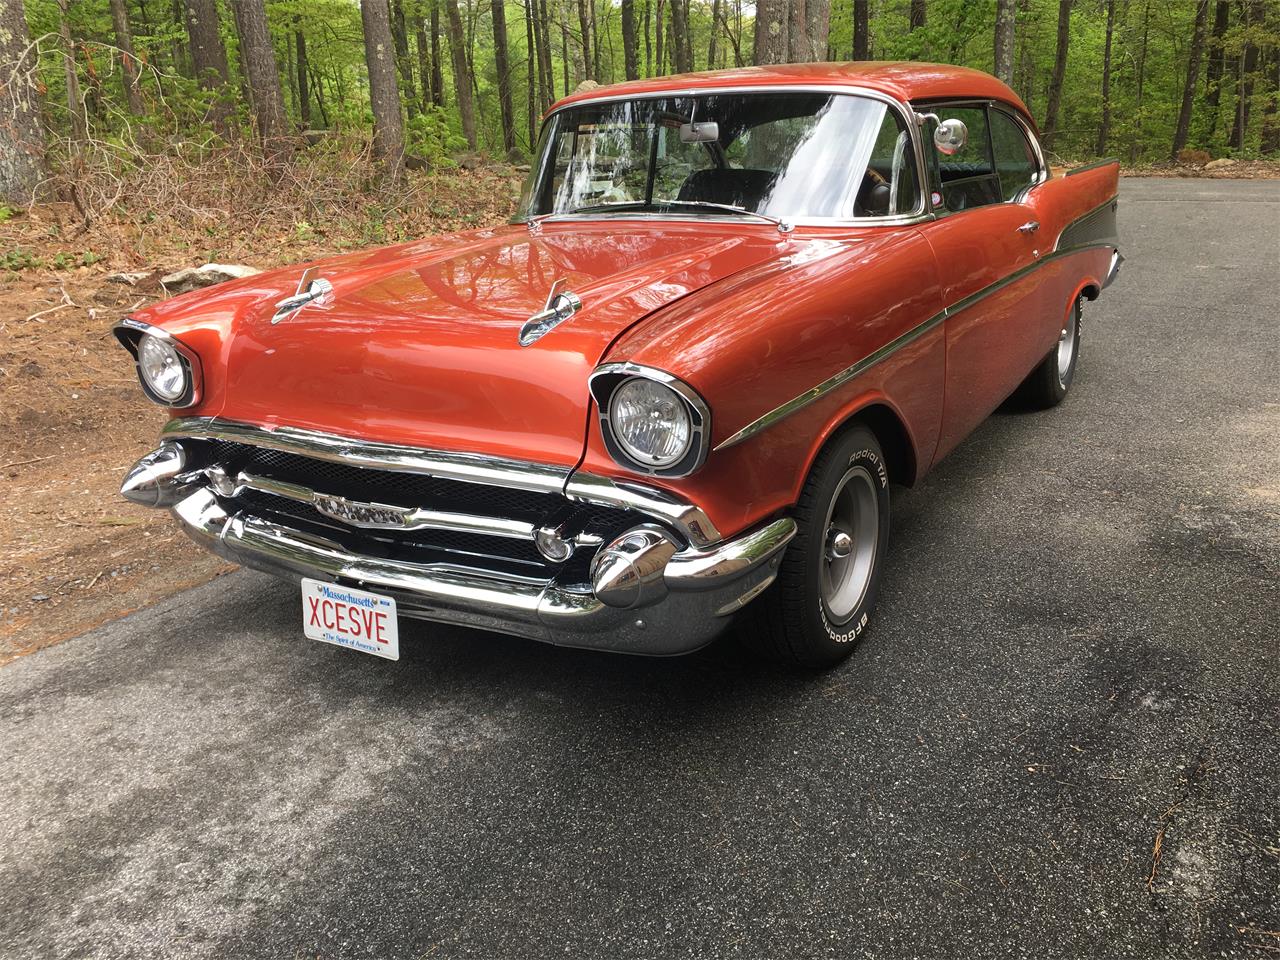 1957 Chevrolet Bel Air for sale in Tyngsborough, MA, MA